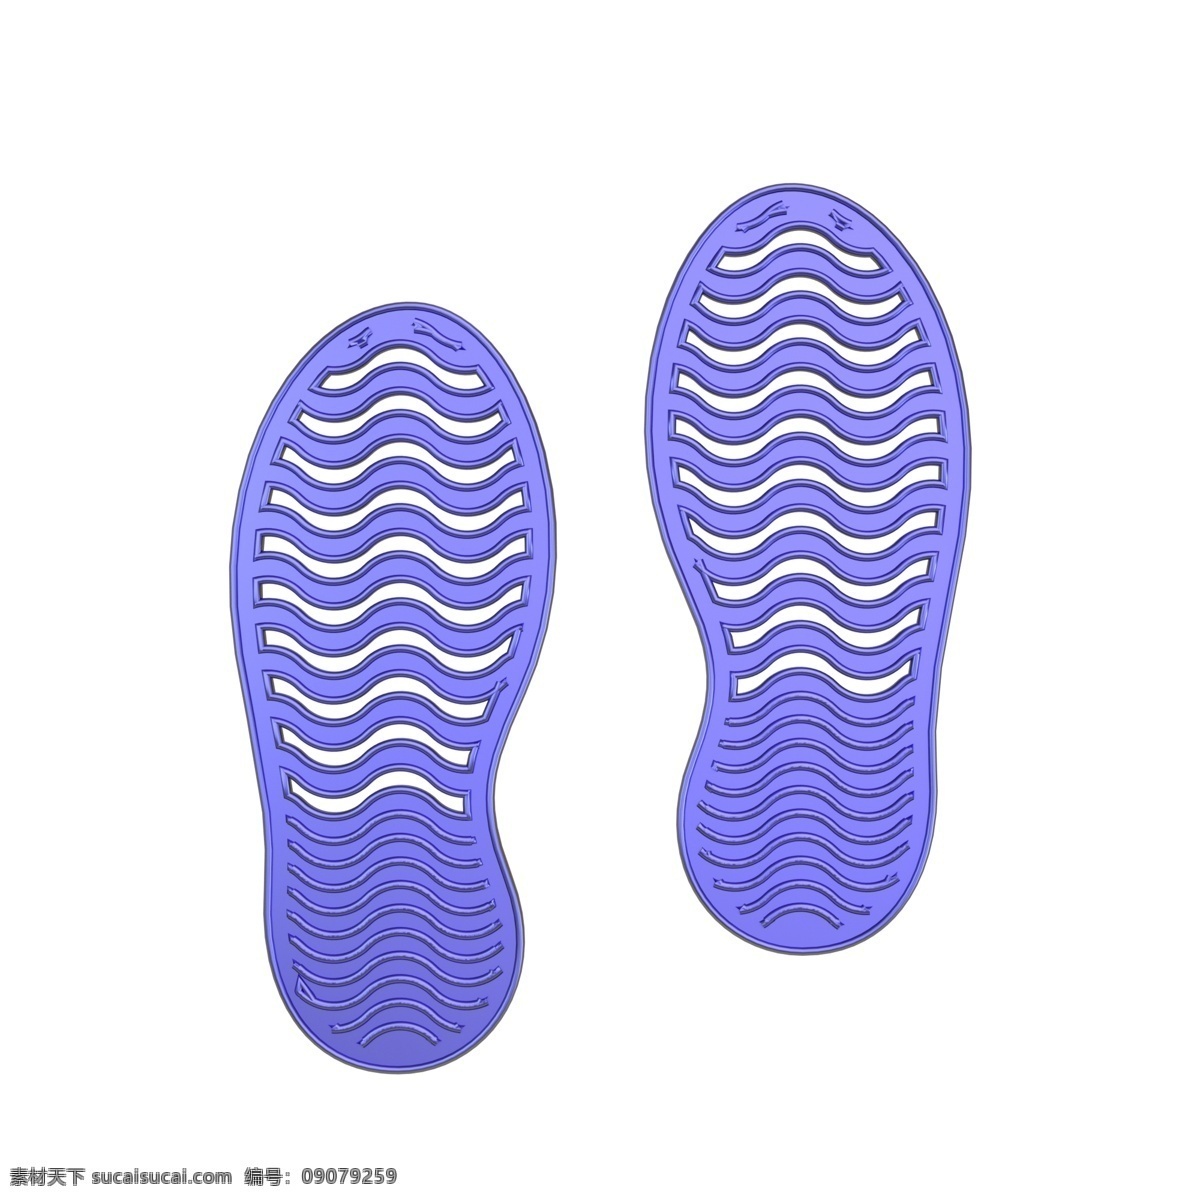 c4d 蓝色 金属 质感 立体 脚印 装饰 3d 脚印装饰 金属质感脚印 平面海报配图 鞋印